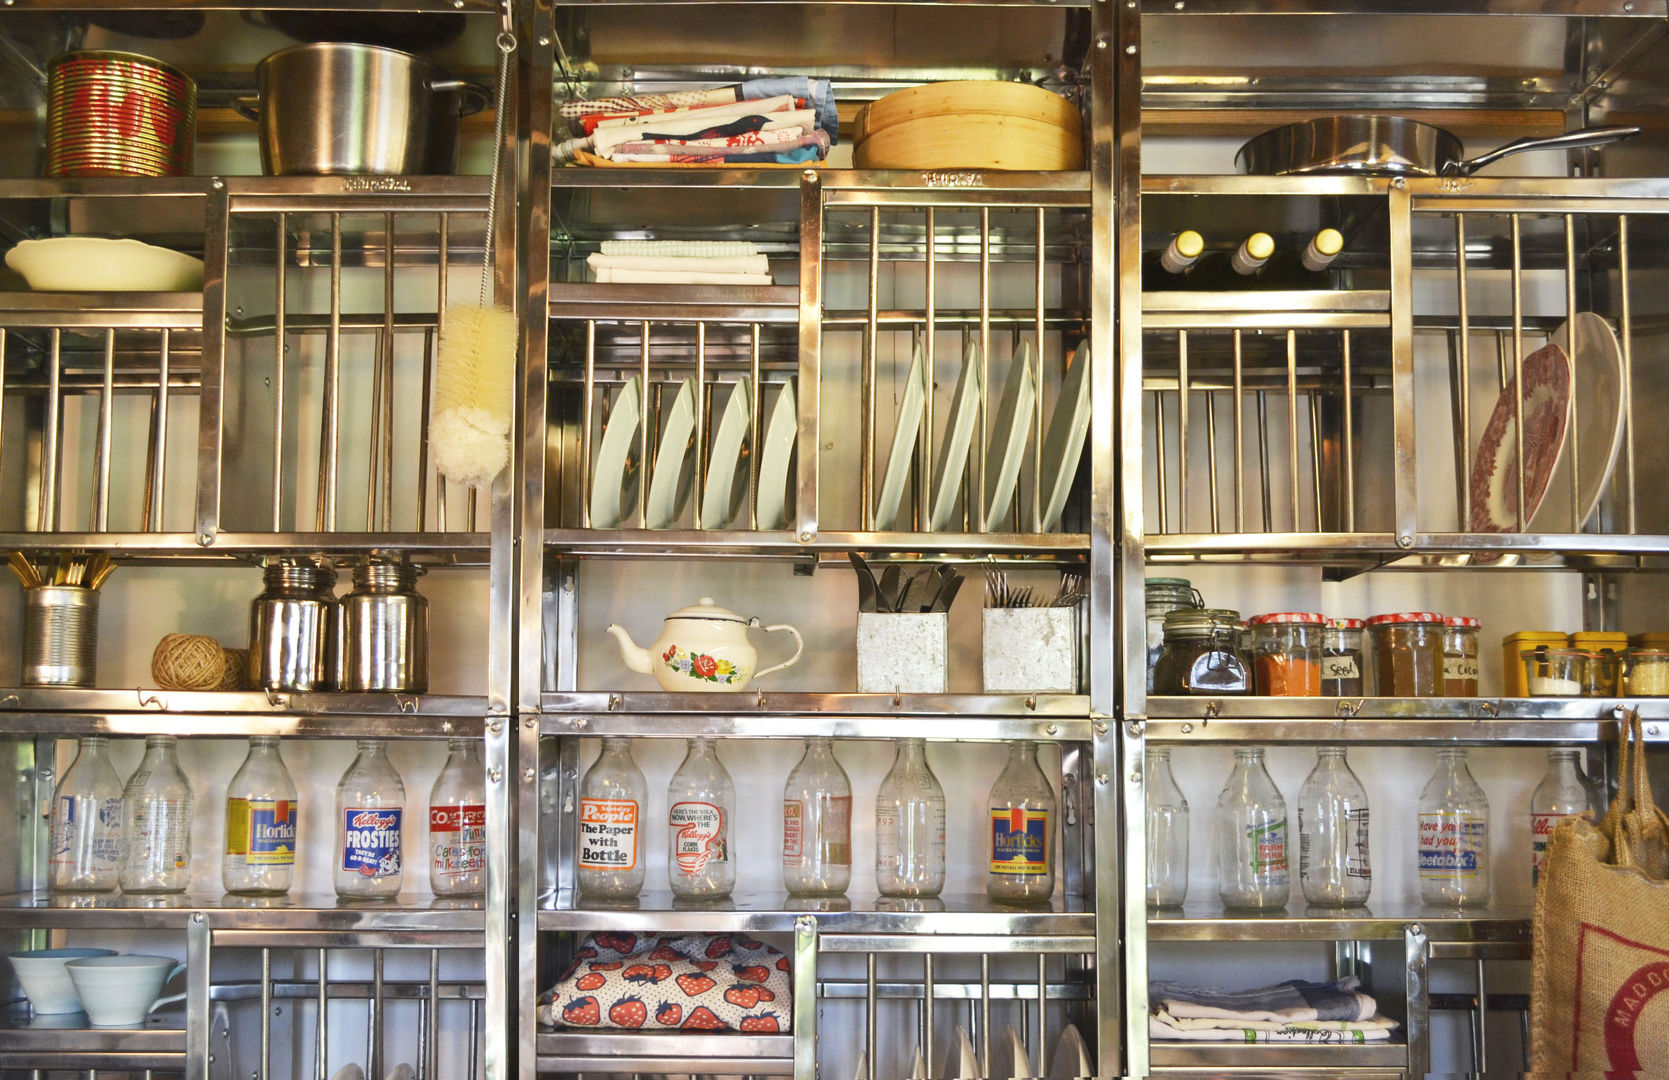 Stainless steel plate racks, The Plate Rack The Plate Rack Кухня в стиле лофт Шкафы и полки